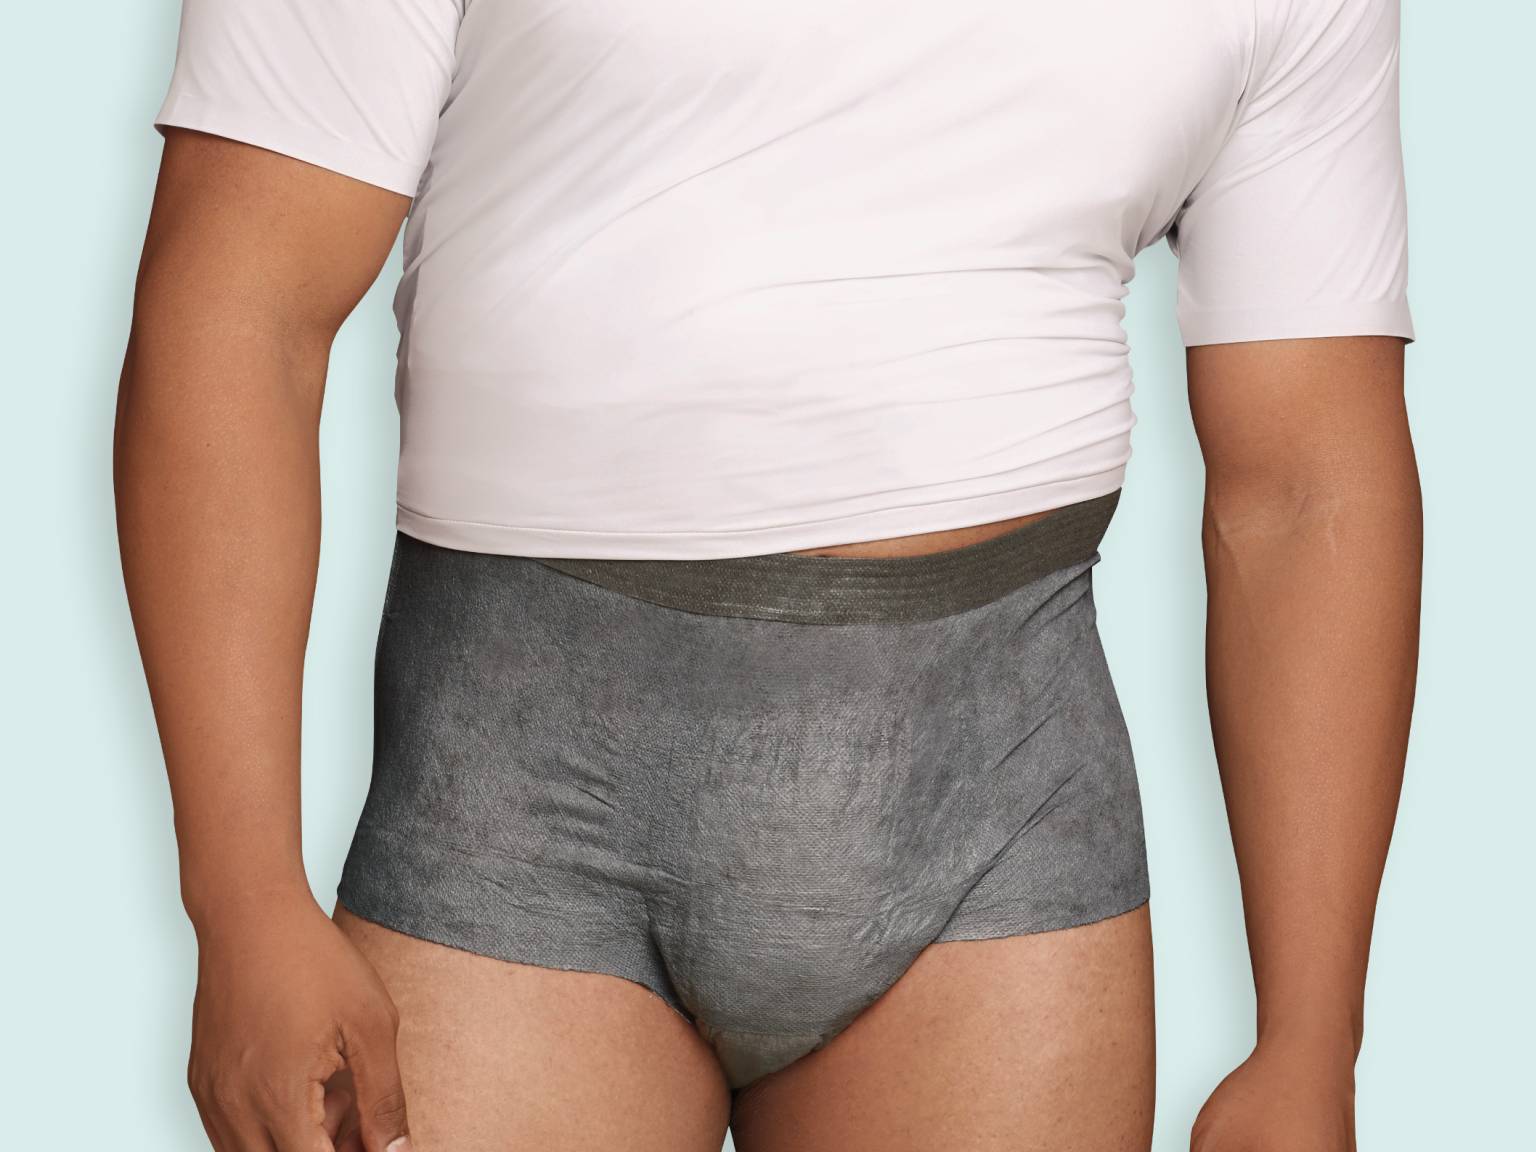 Men's Underwear in Gray